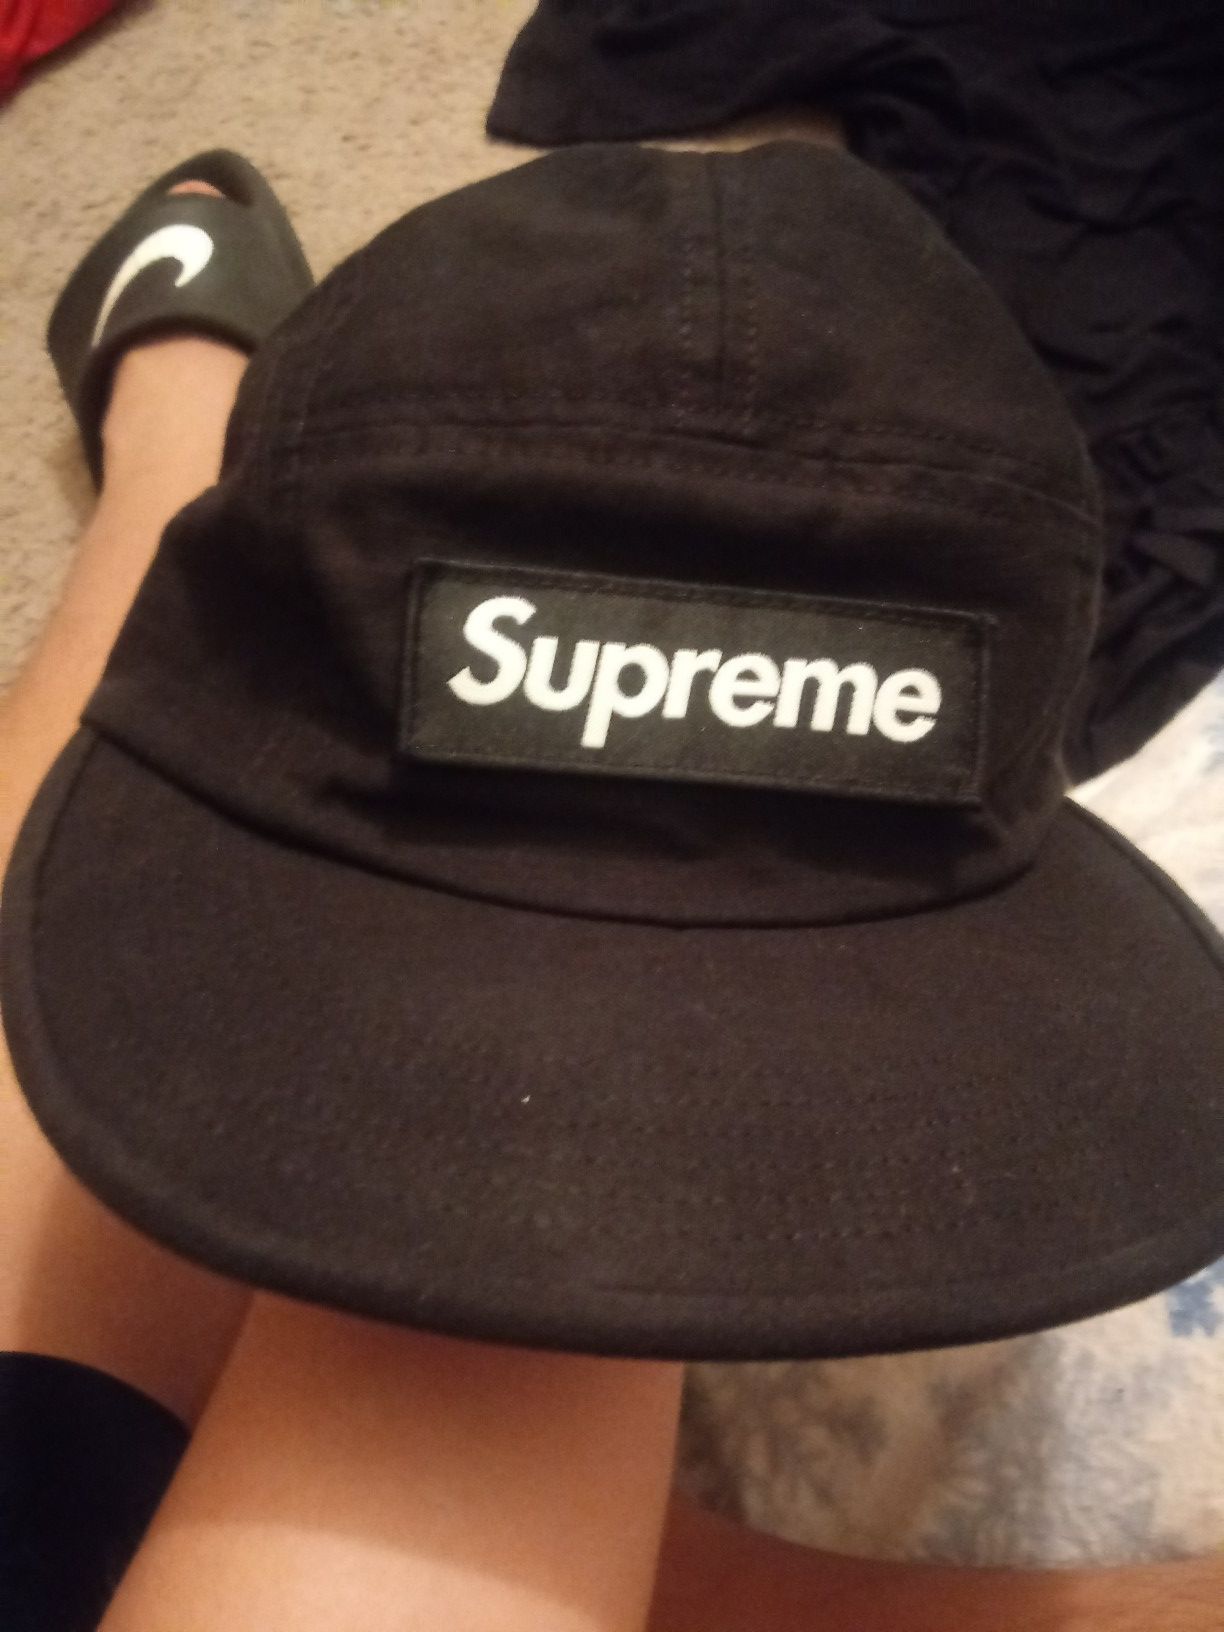 Supreme hat new